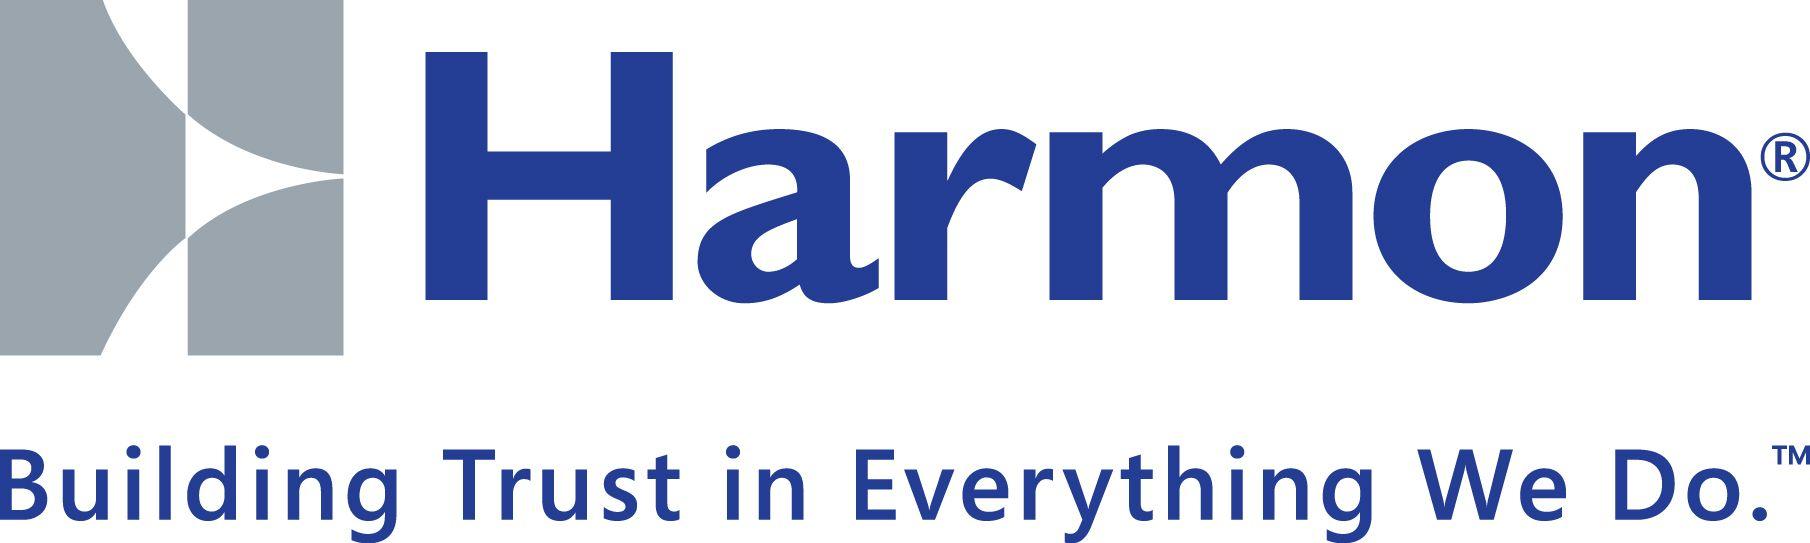 Harmon Logo - Harmon | Apogee Enterprises, Inc.